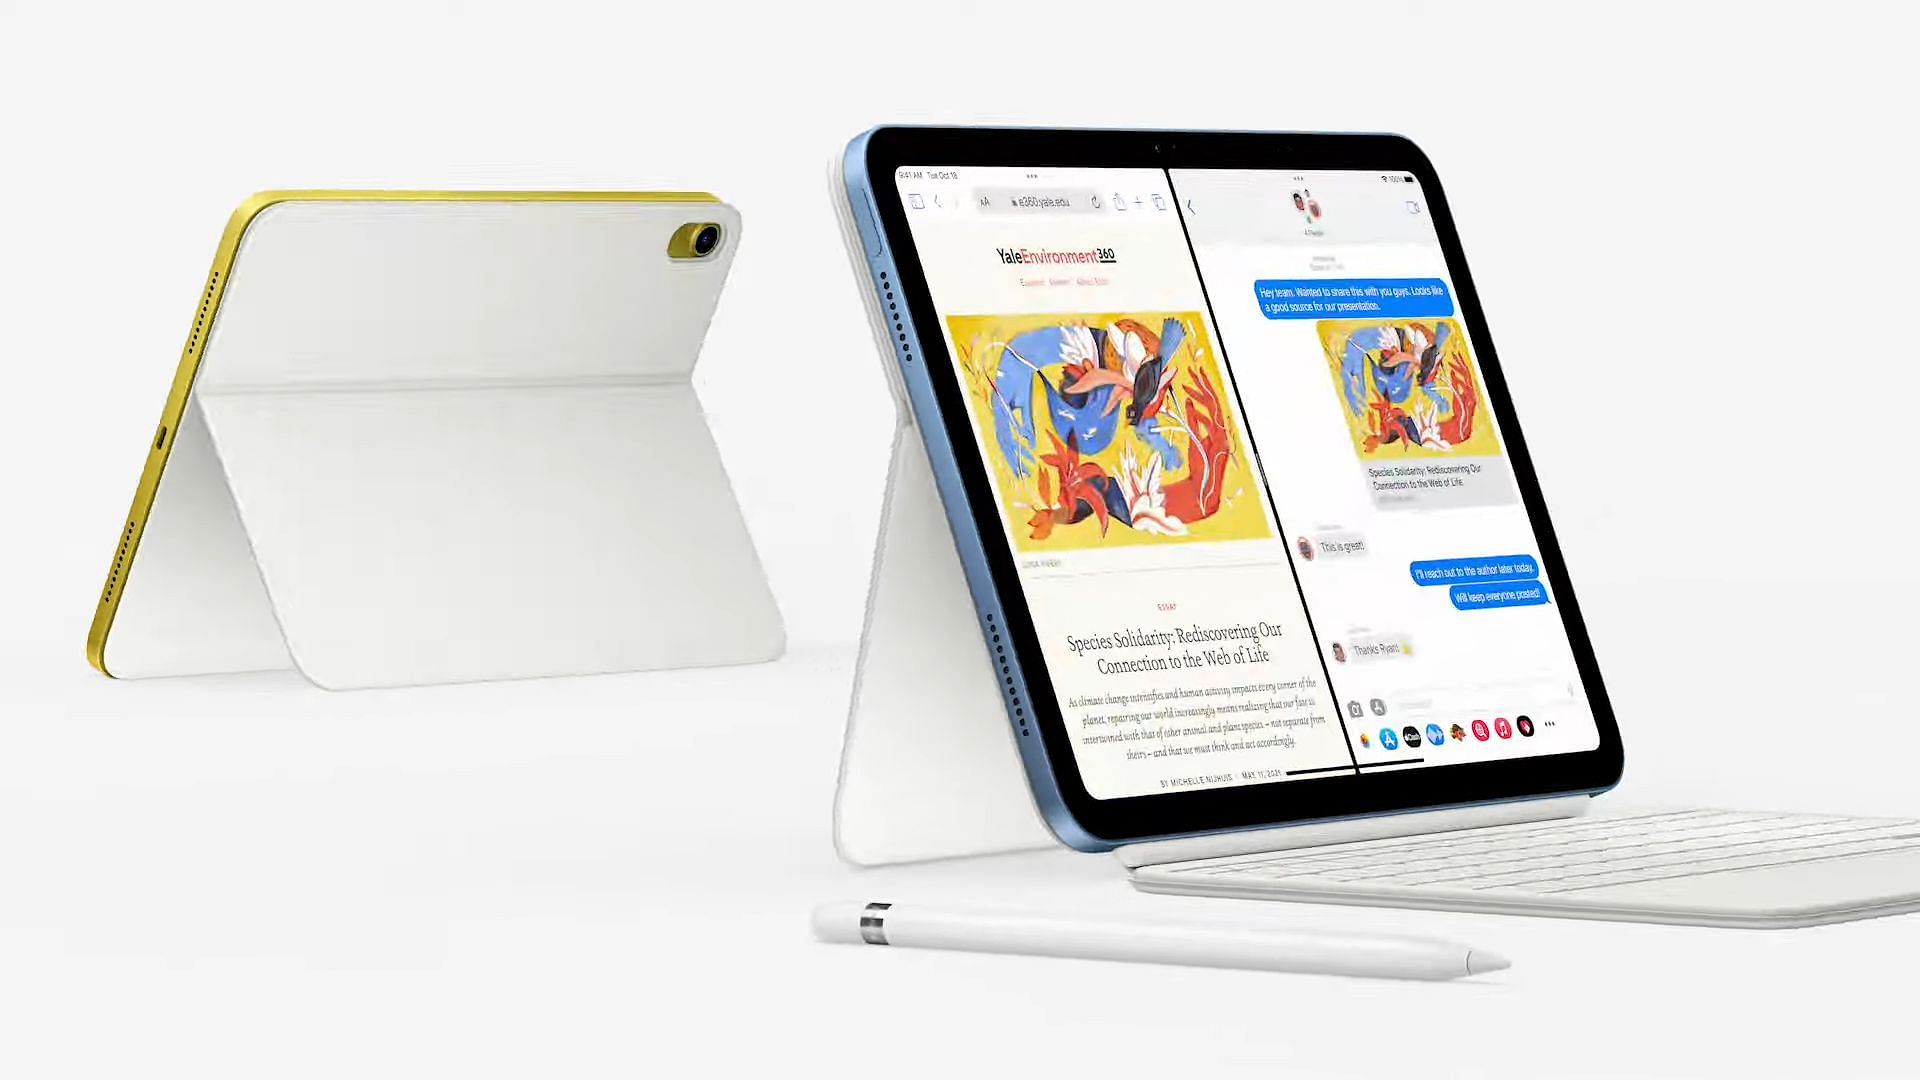 The Magic Keyboard Folio connected to the iPad (Image via Apple)